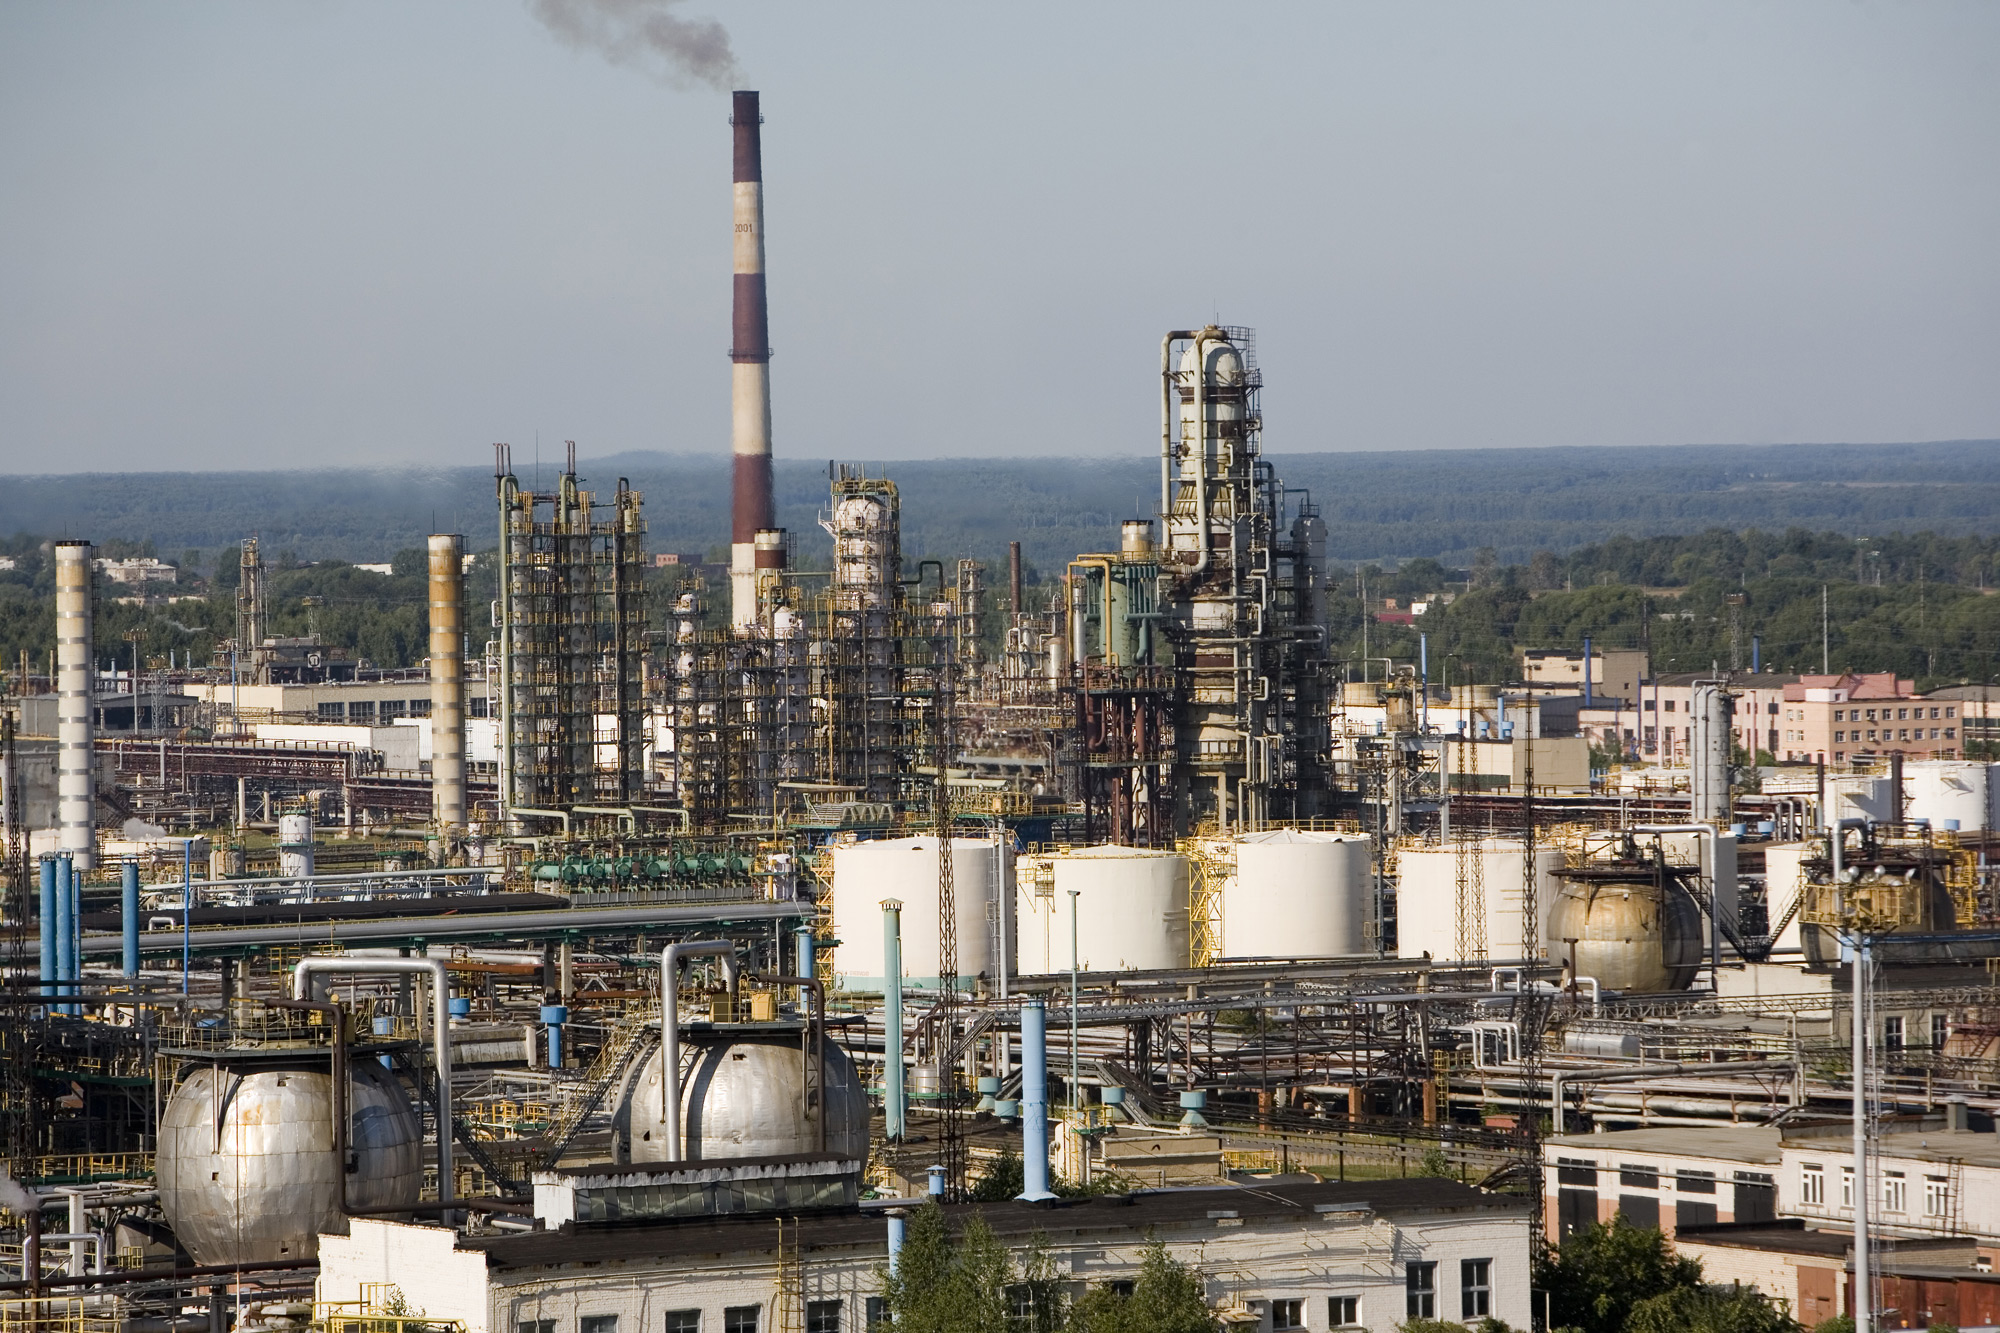 Slafneft refinery in Yaroslavl